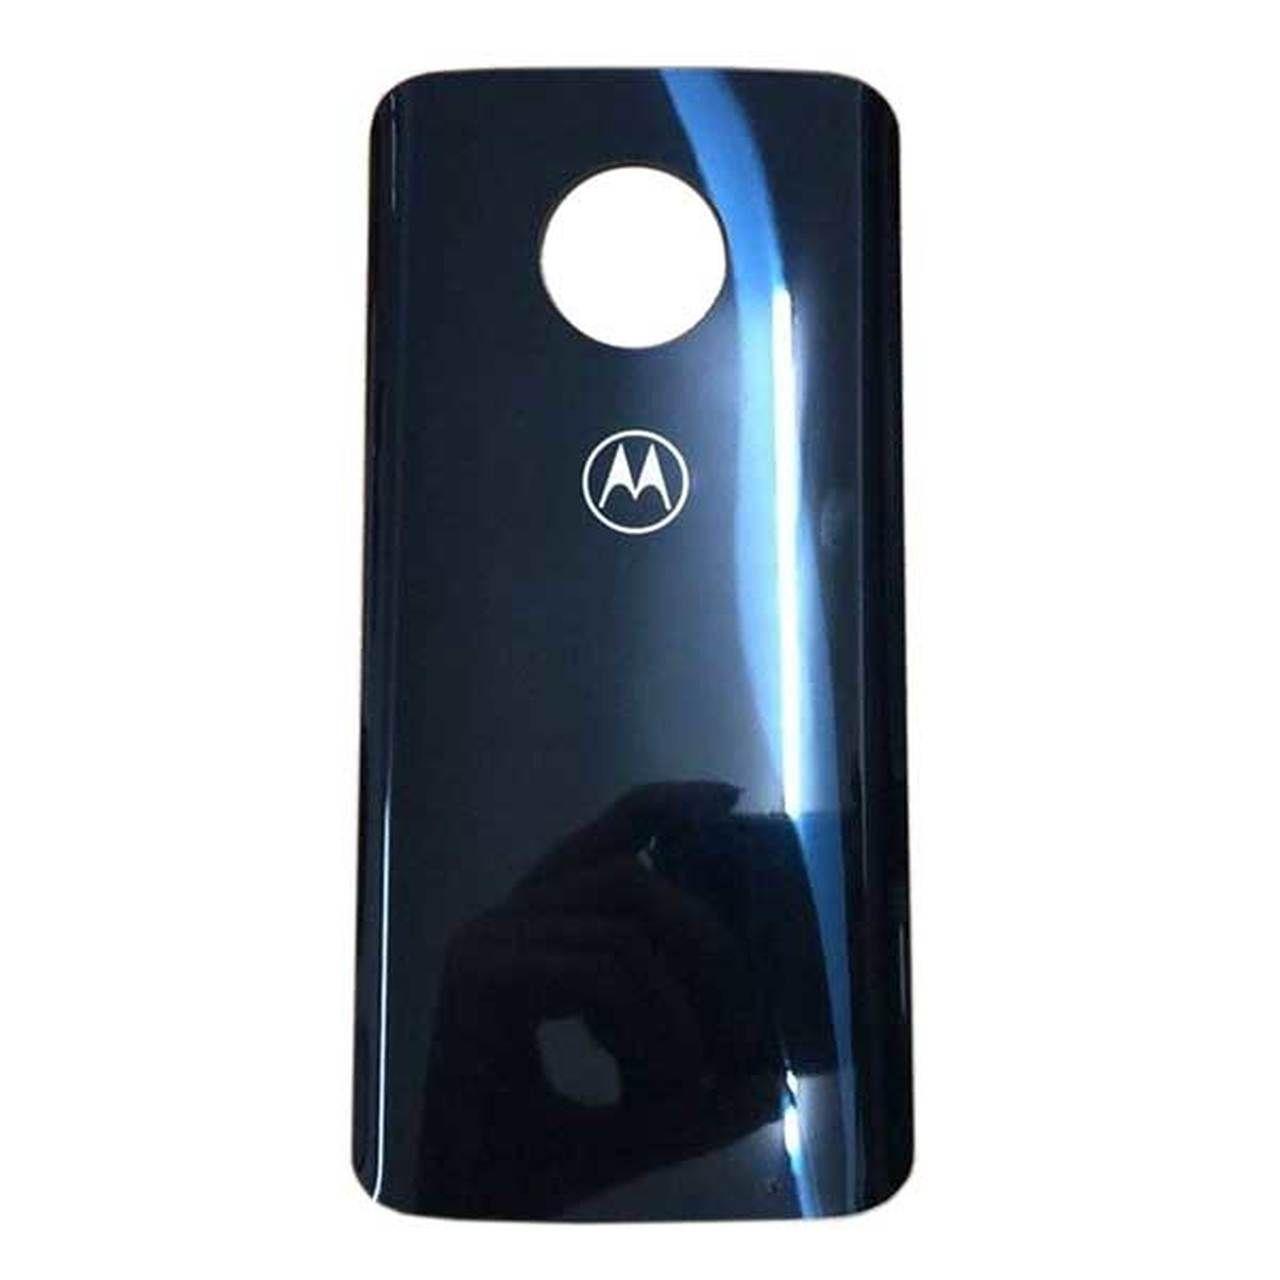 Battery cover Motorola Moto g6 plus blue